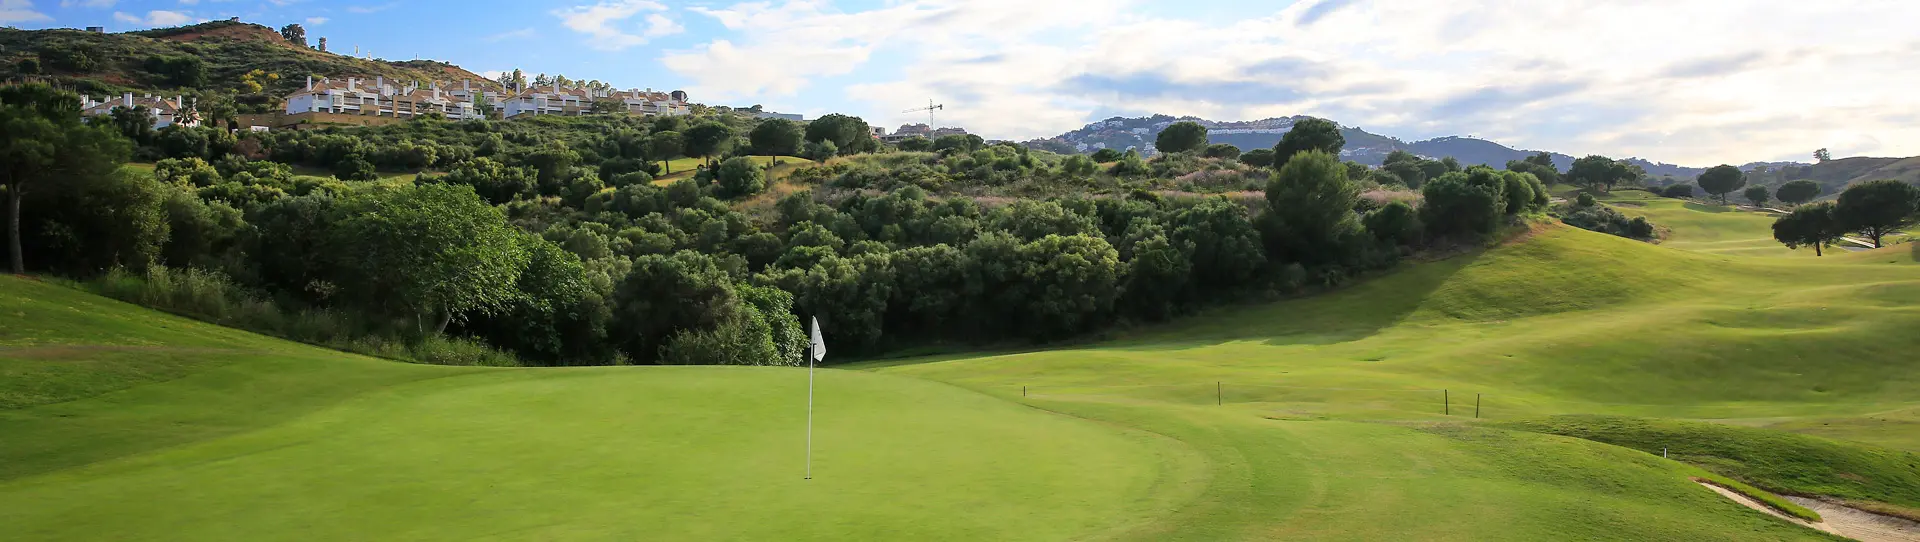 Spain golf courses - La Cala America - Photo 2